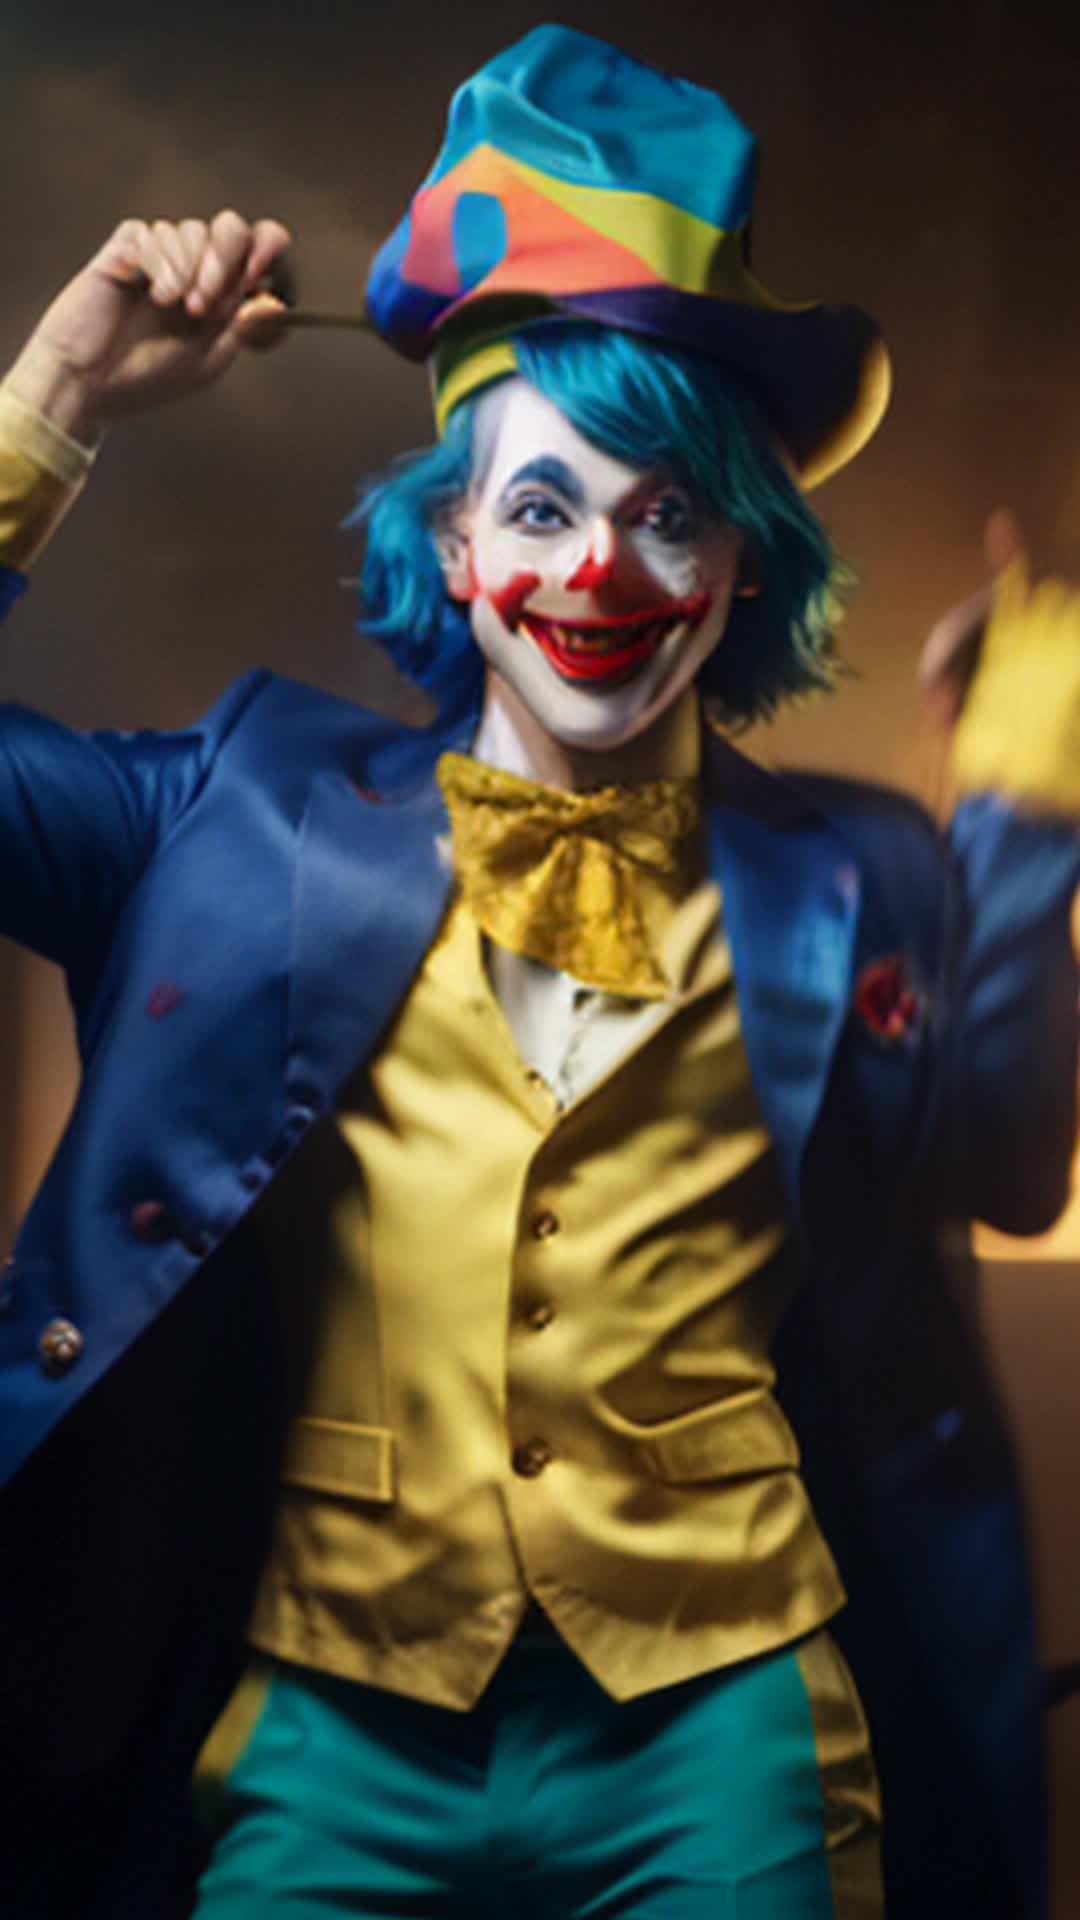 Mischievous jester clown with colorful cape flourishing, commanding acrobat troupe, poised like seasoned ringmaster, dynamic, Soft lighting highlighting vibrant costumes, Portrait shot